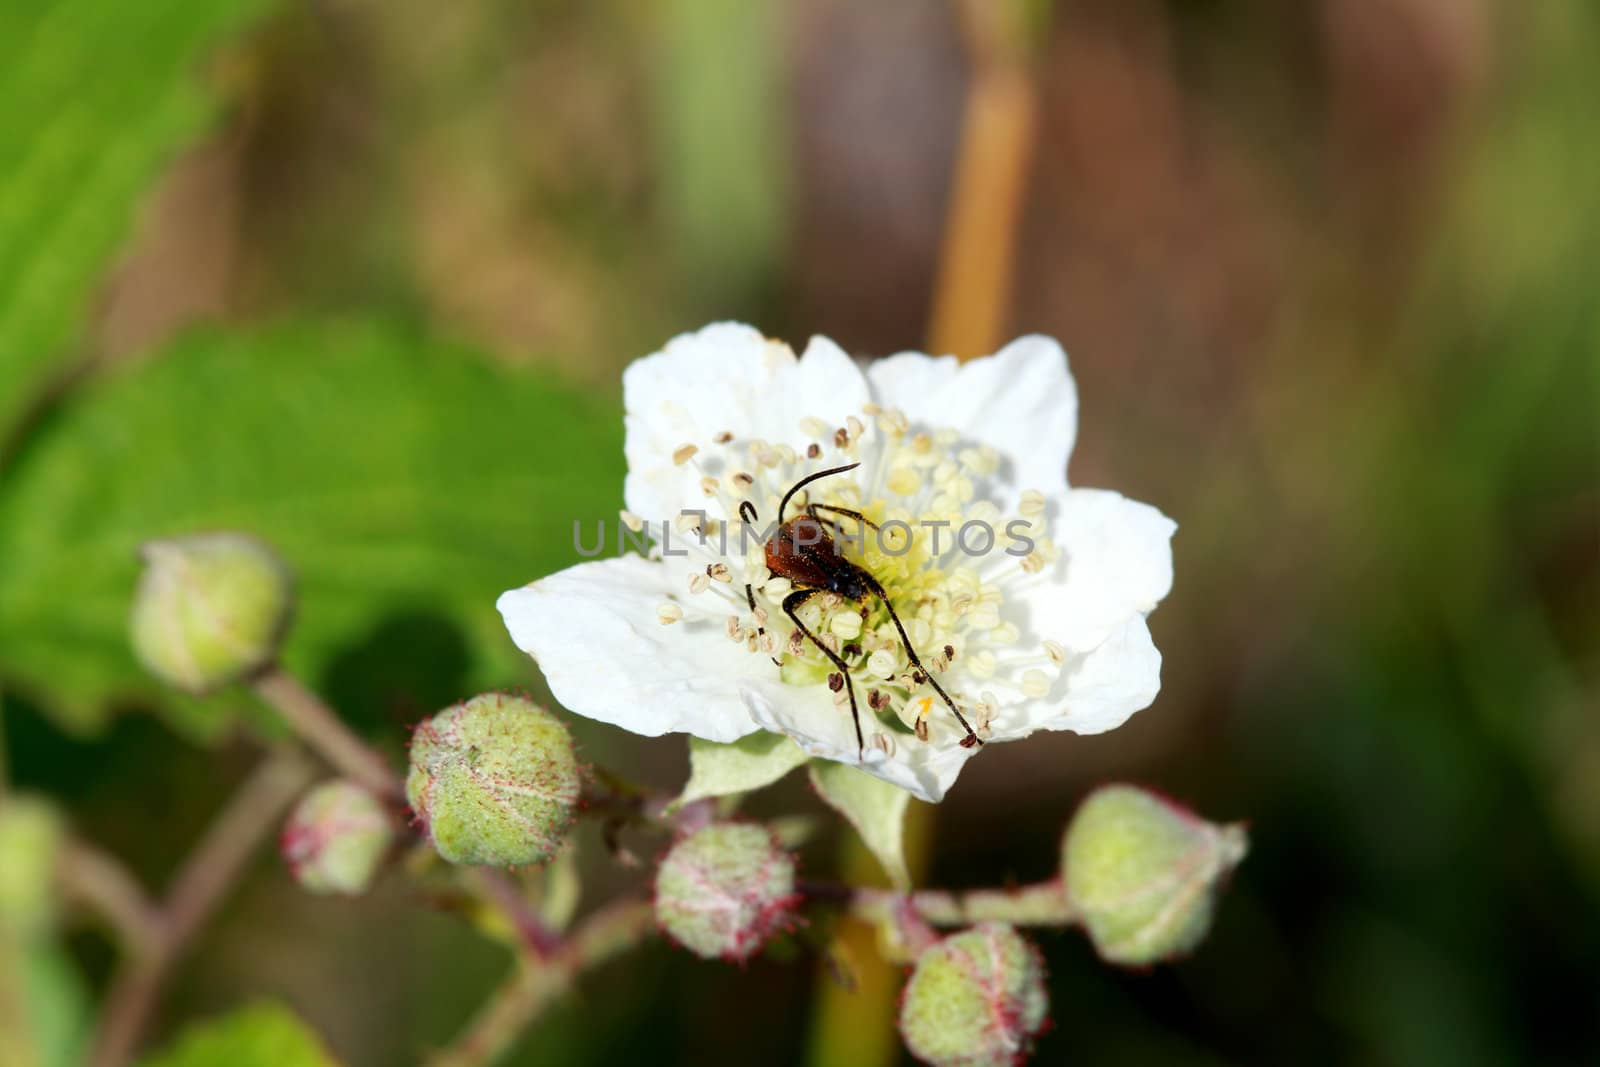 blackberry - Rubus fruticosus white flower outdoors